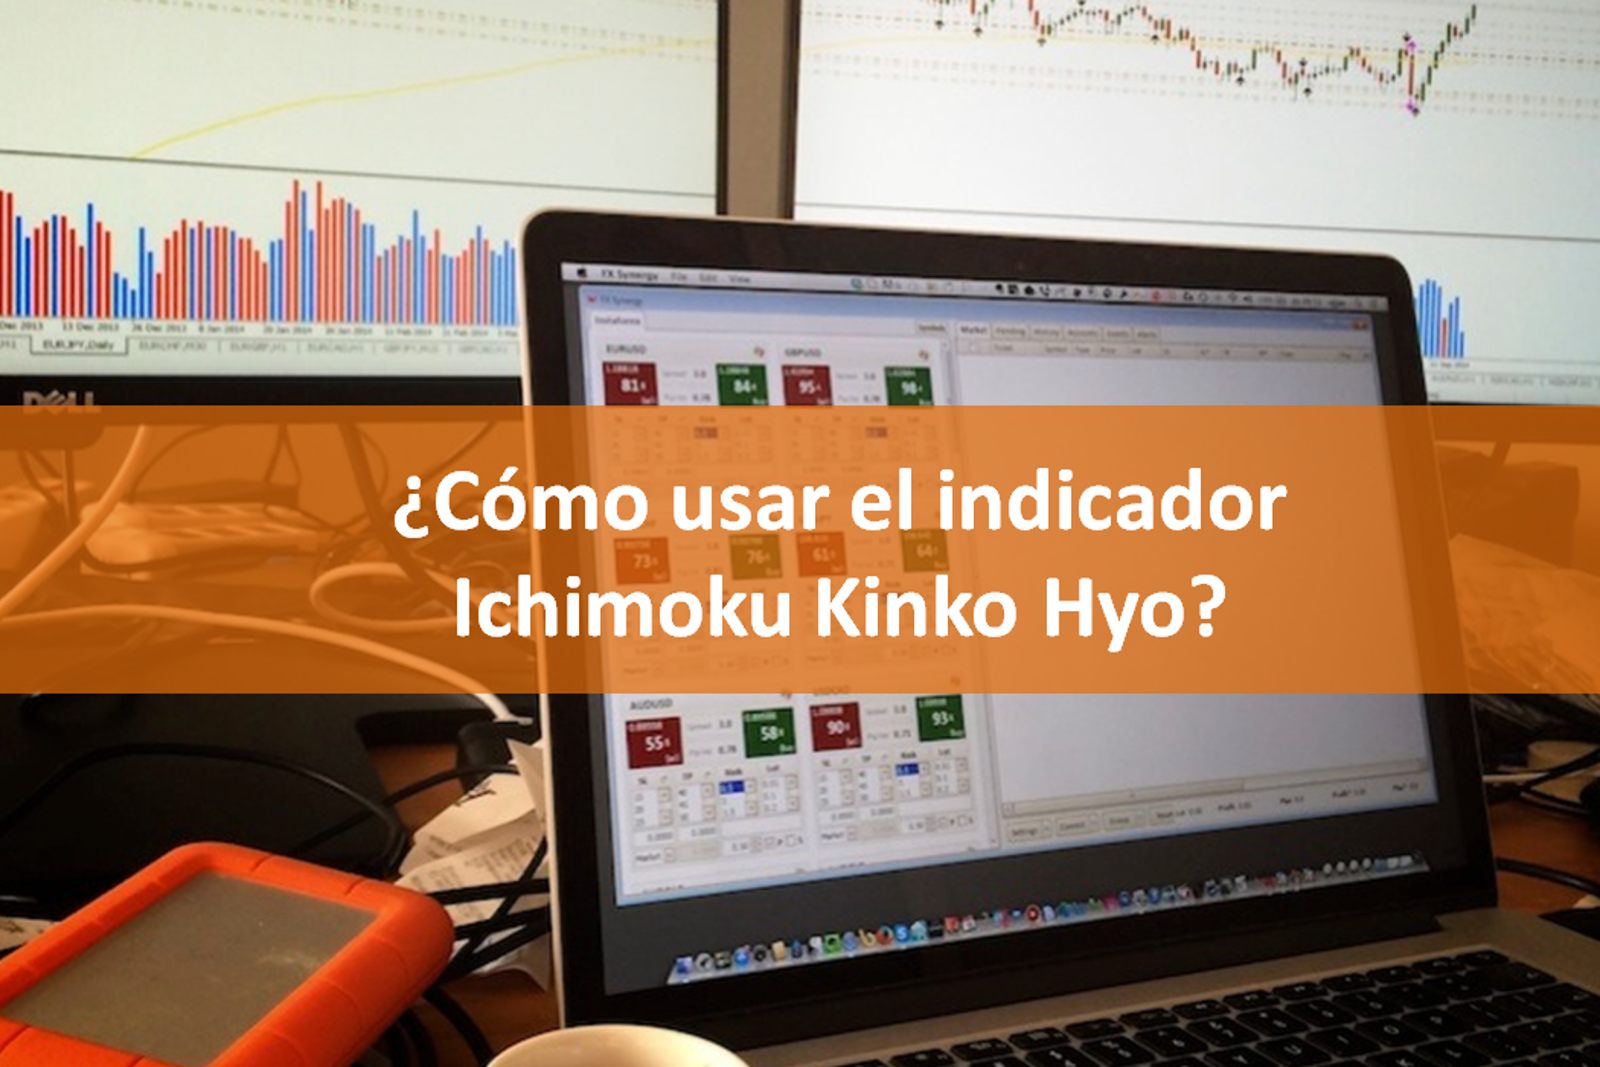 ¿Cómo usar el indicador Ichimoku Kinko Hyo?